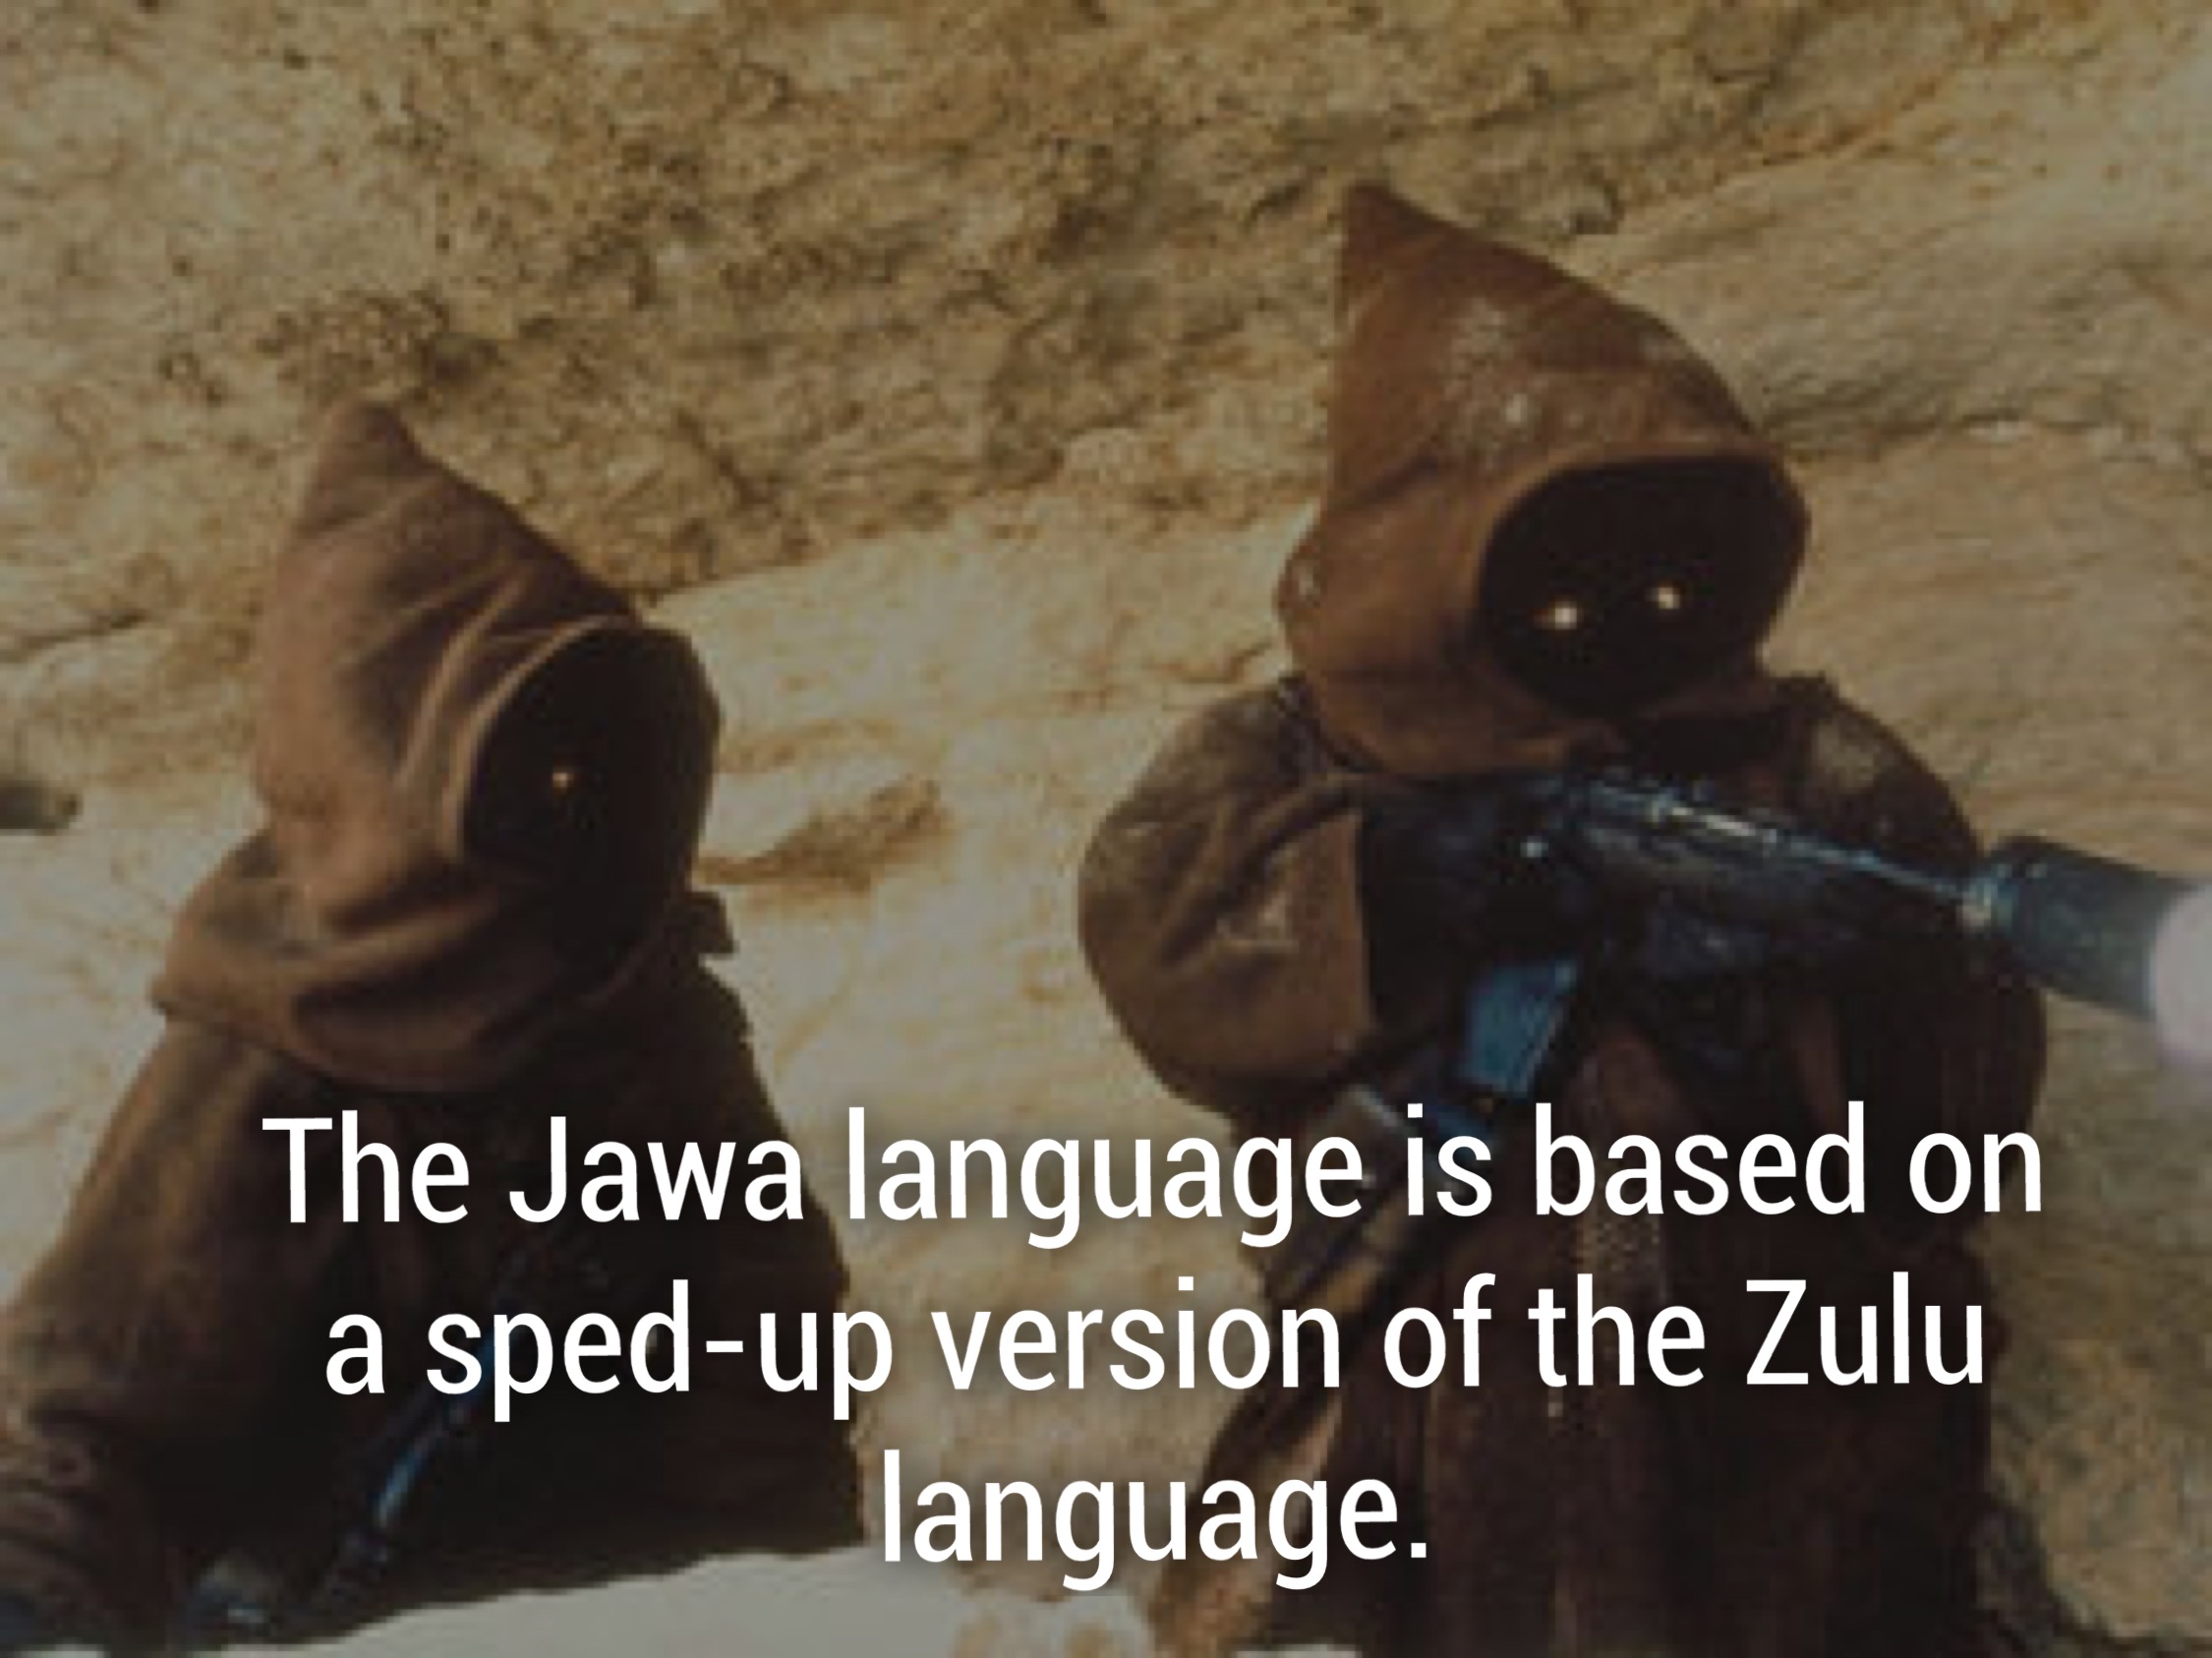 jawa star wars - The Jawa language is based on a spedup version of the Zulu language.